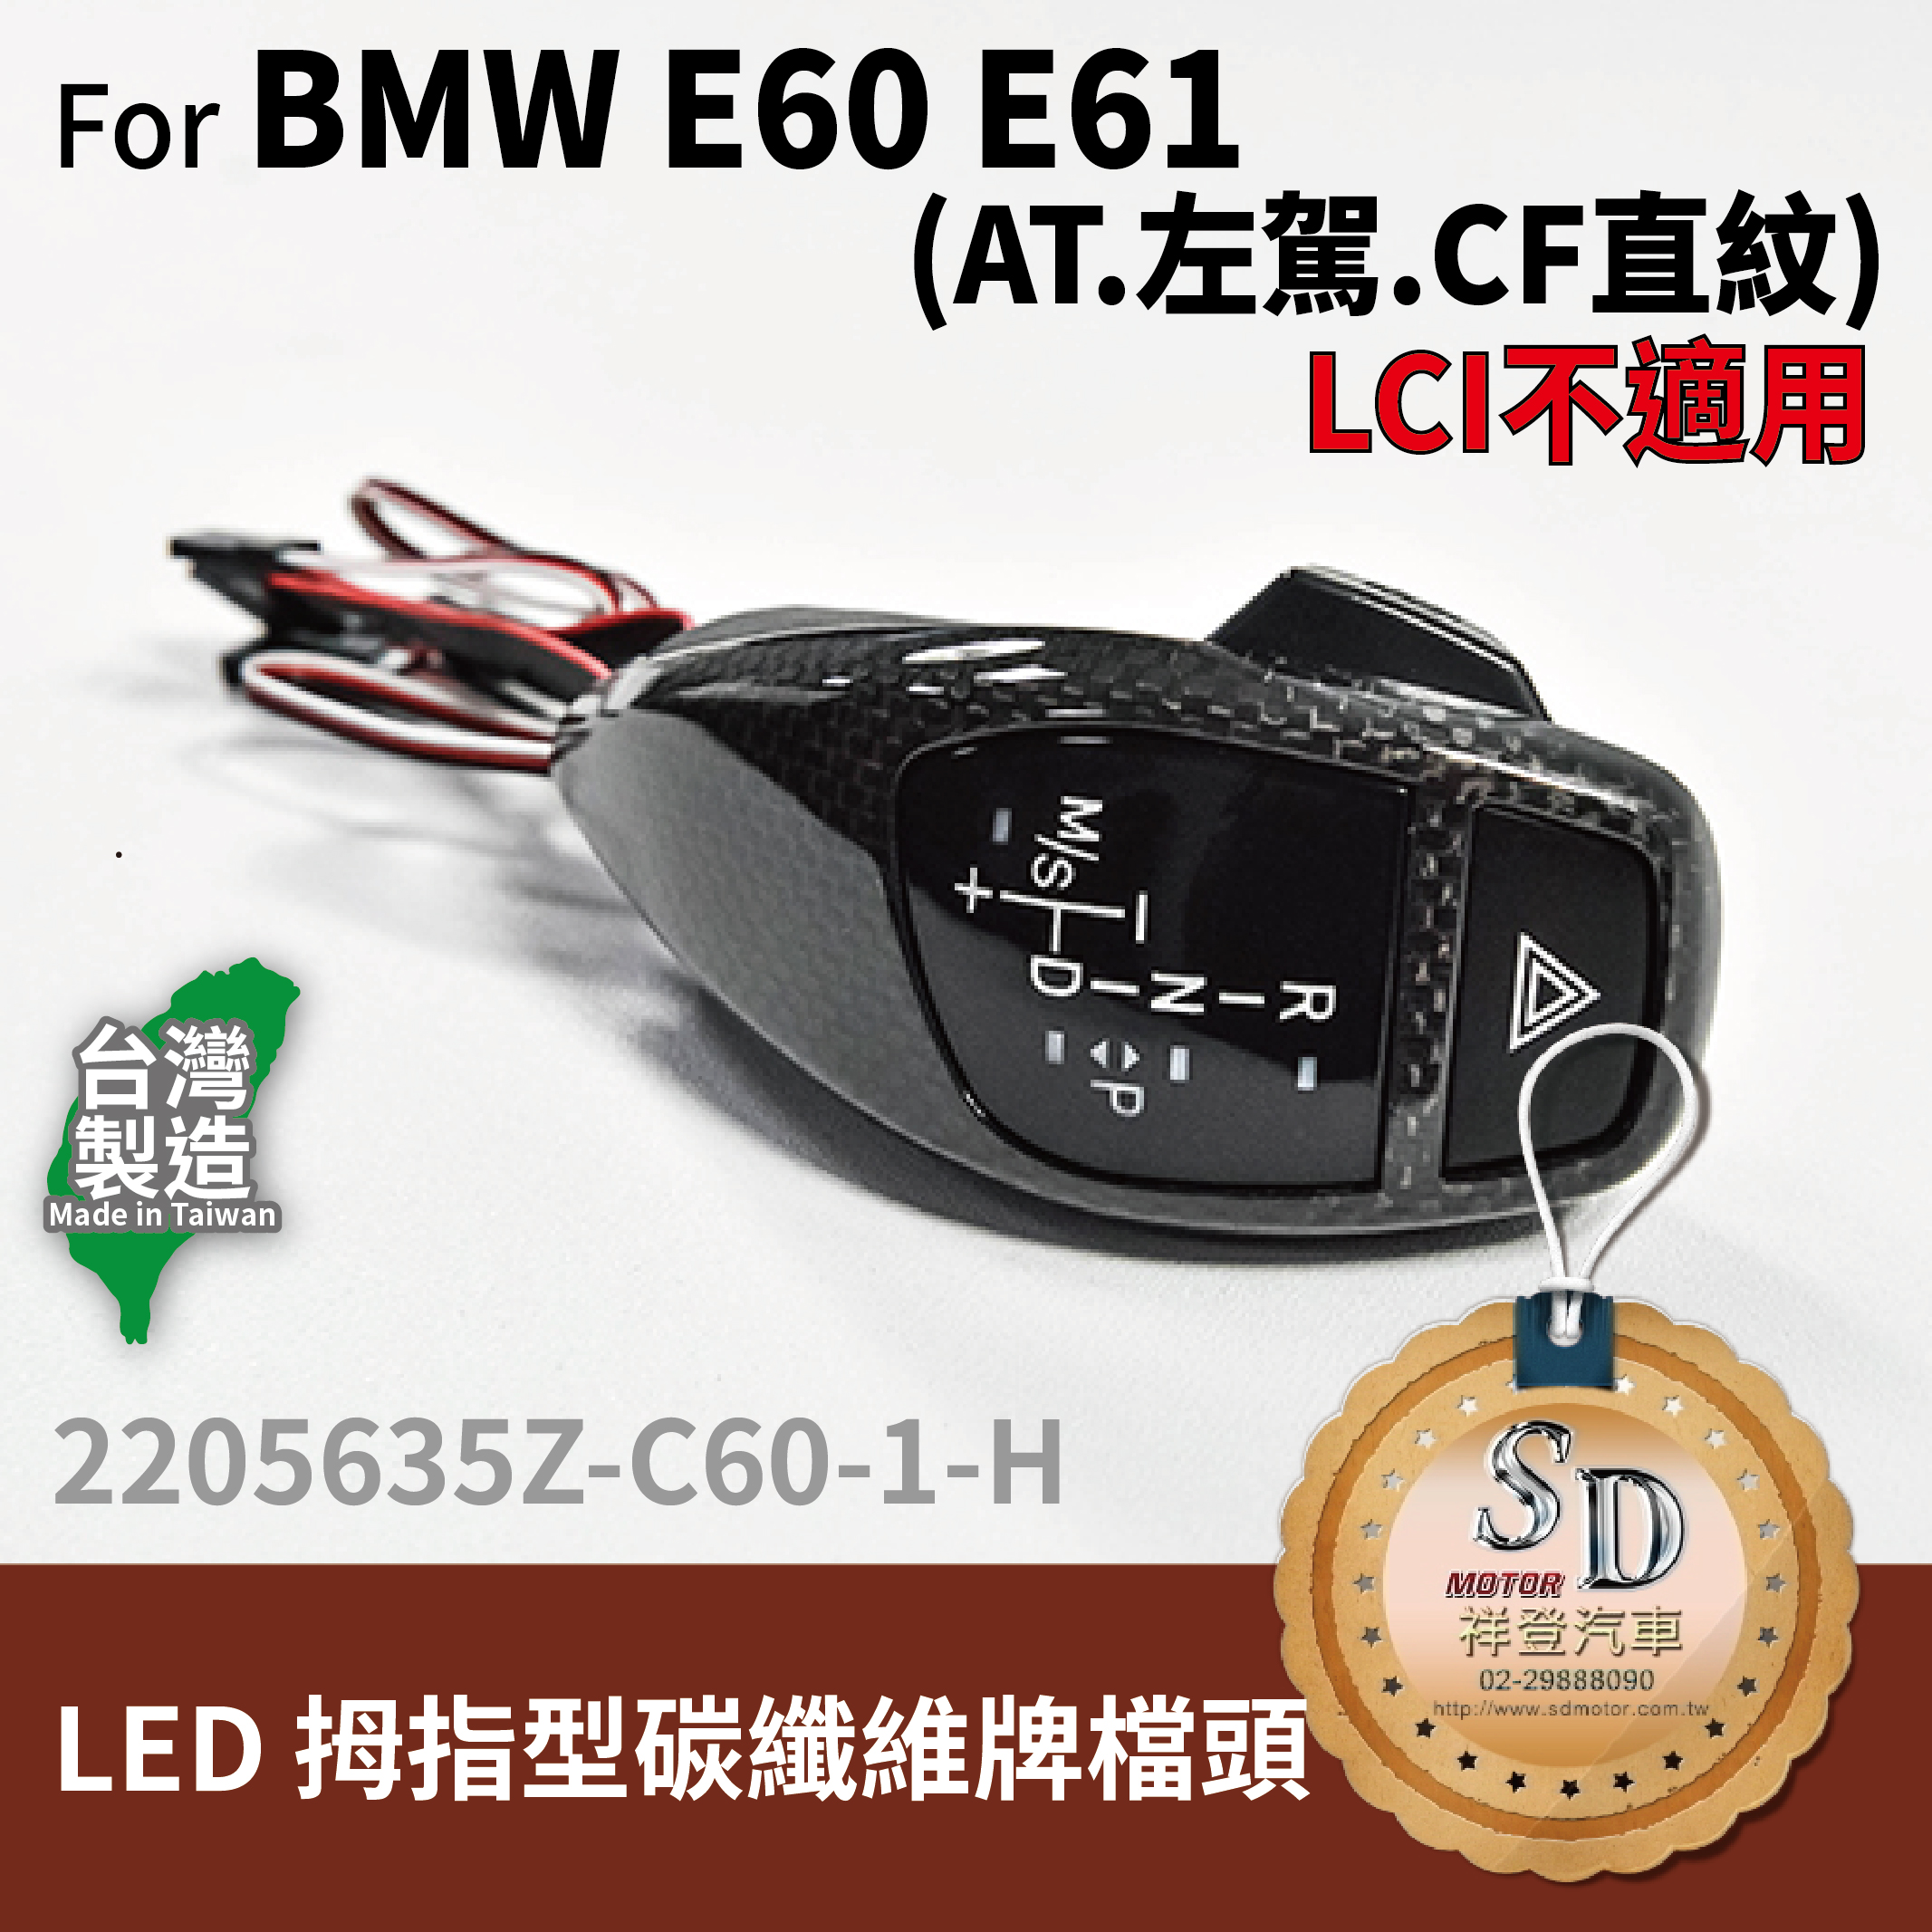 For BMW E60/E61 LED 拇指型排檔頭 A/T，右駕，CF直紋(1X1)，有警示燈